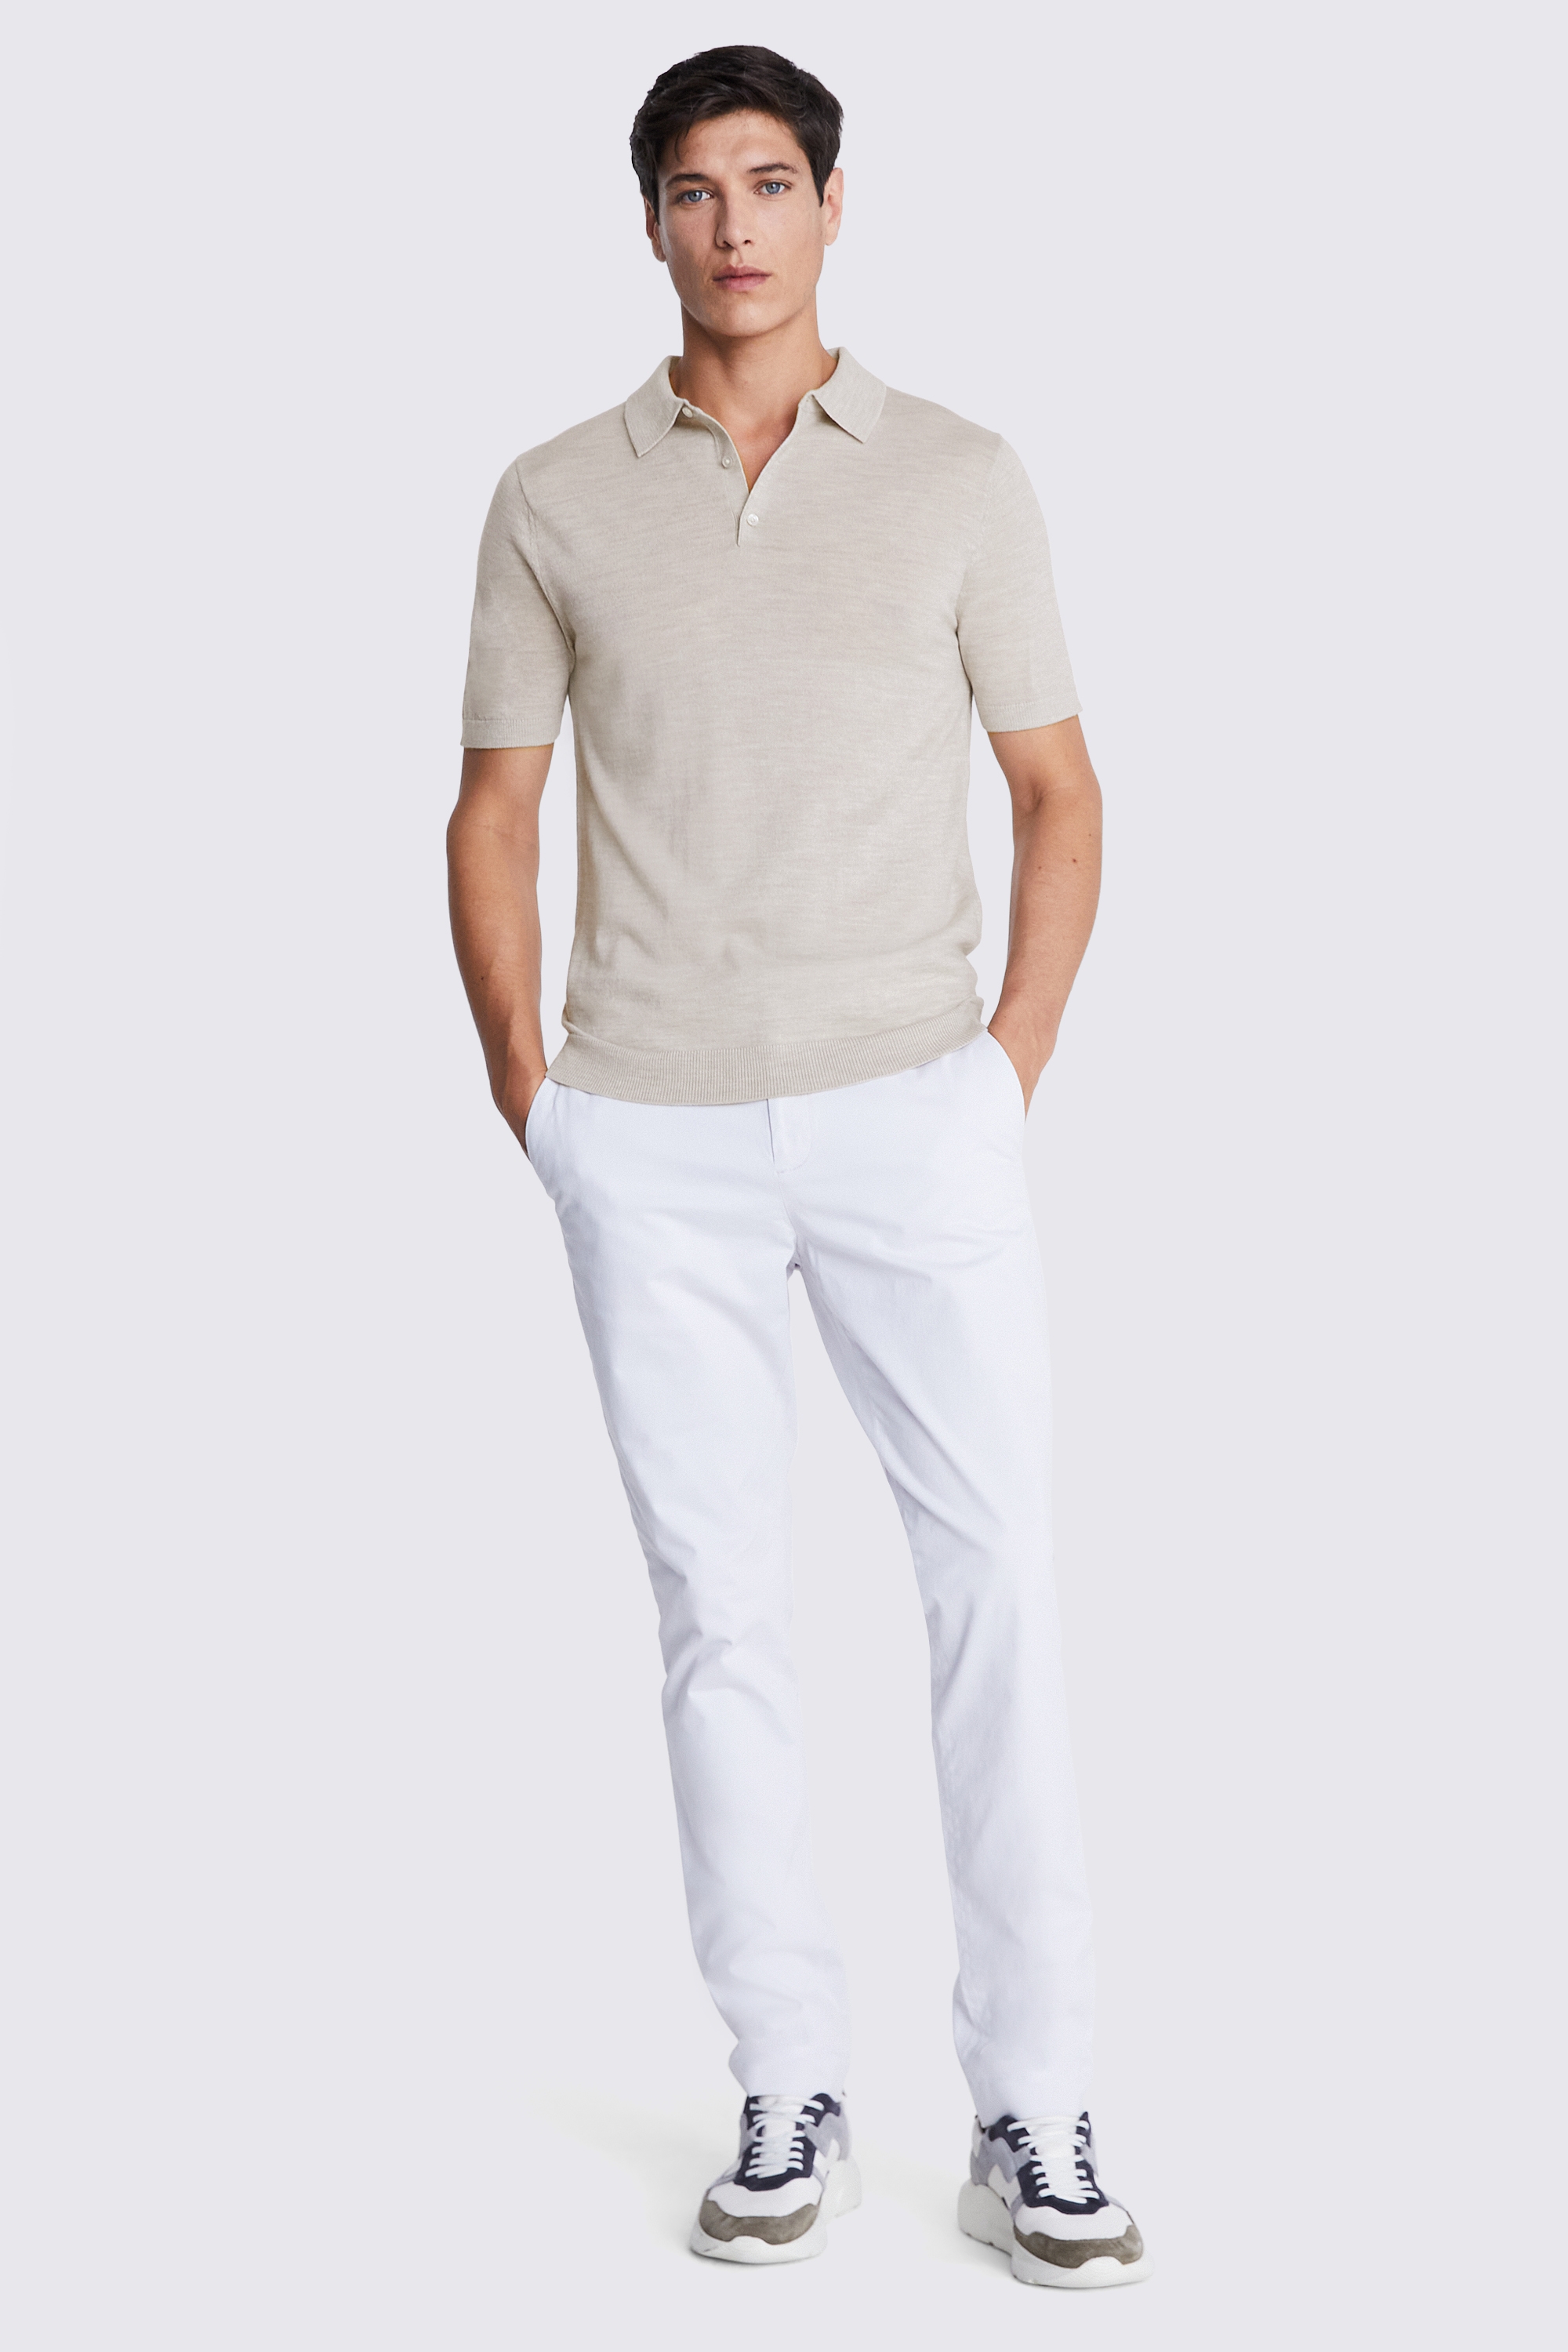 Oatmeal Merino 3 Button Polo Shirt | Buy Online at Moss